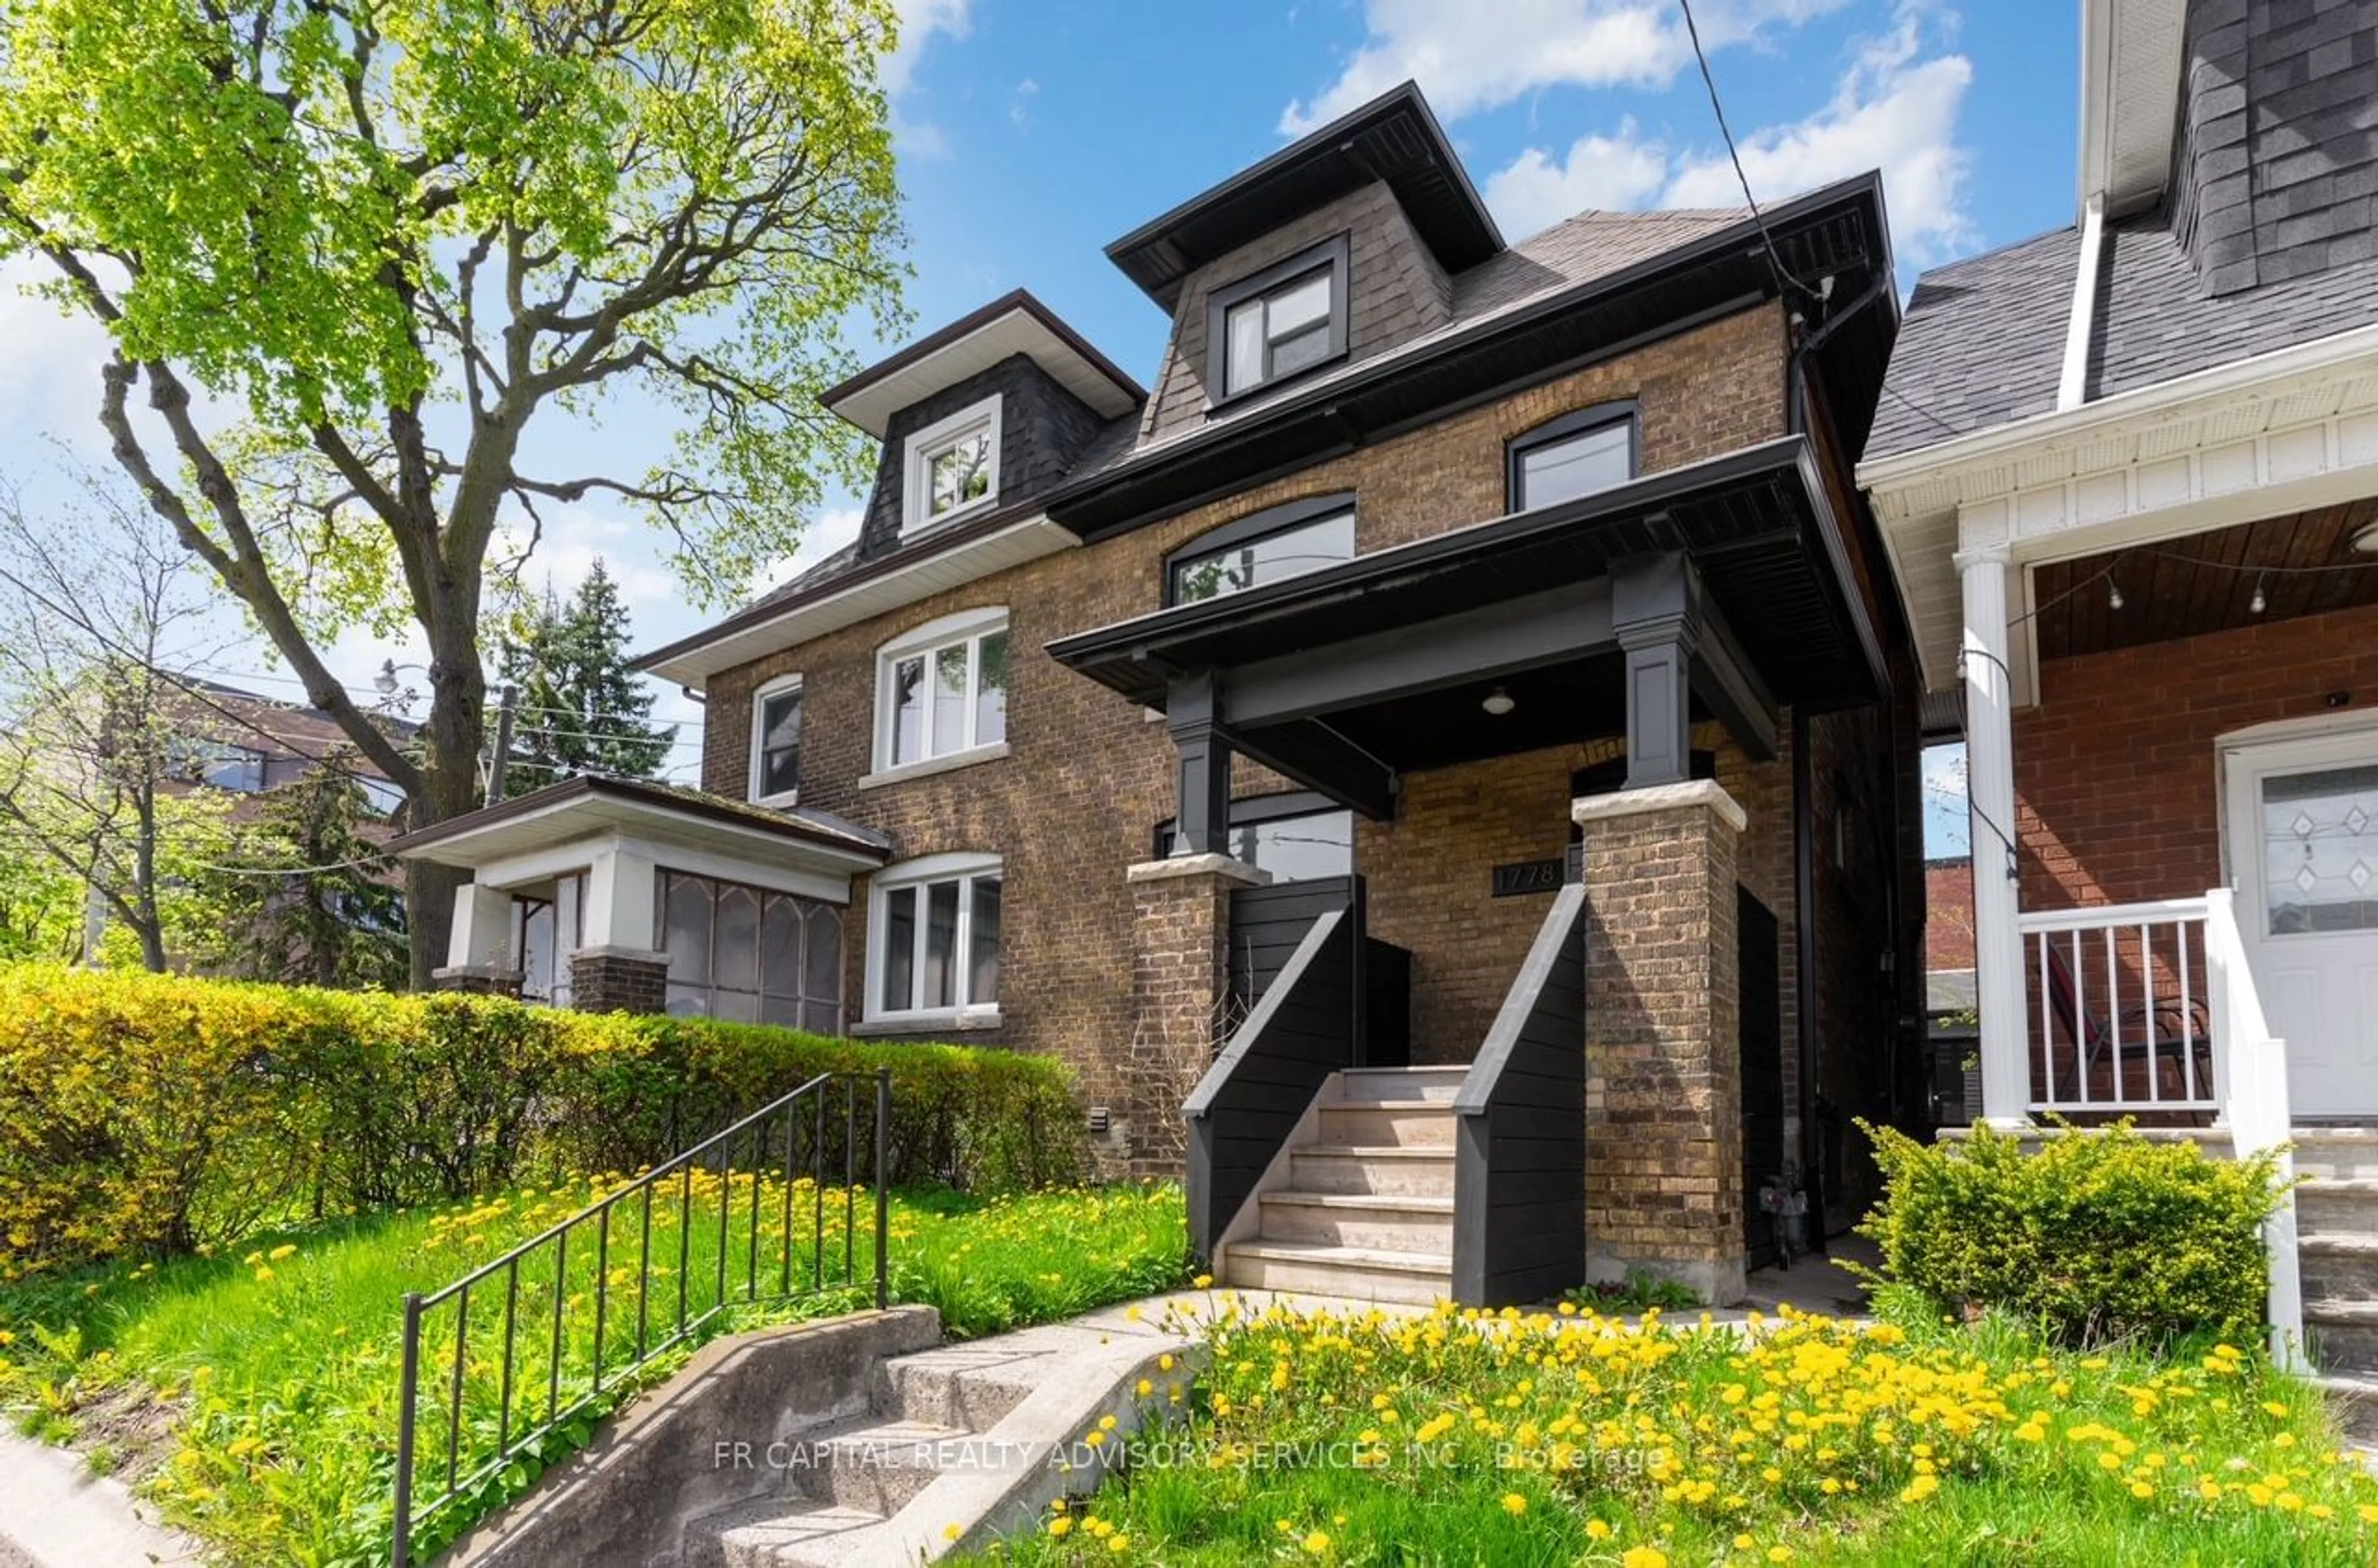 Home with brick exterior material for 1778 Dufferin St, Toronto Ontario M6E 3P4